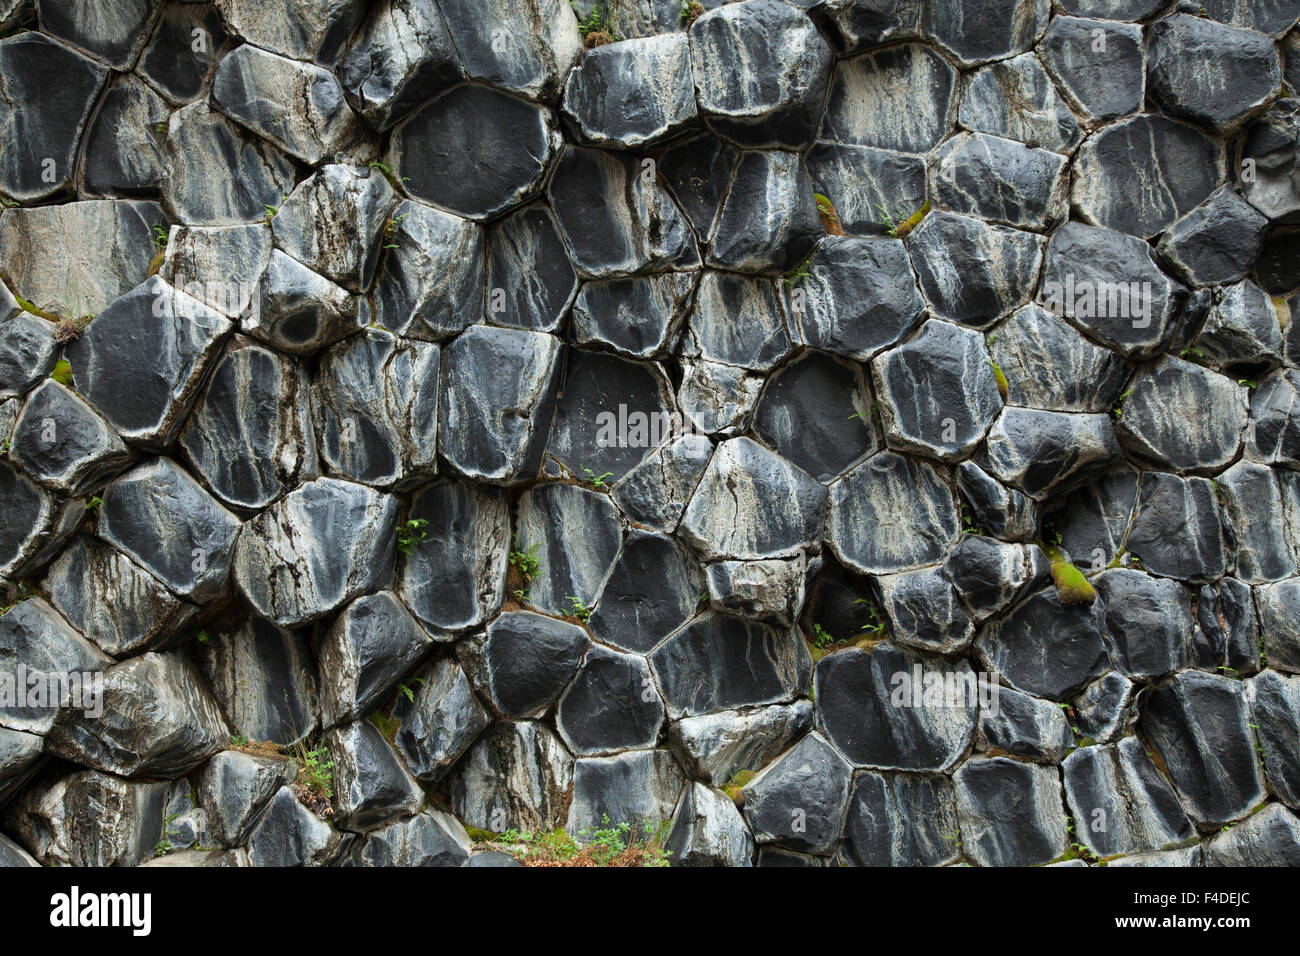 Honeycomb pattern of basalt rock at Hljodaklettar, Jokulsargljufur, Nordhurland Eystra, Iceland. Stock Photo